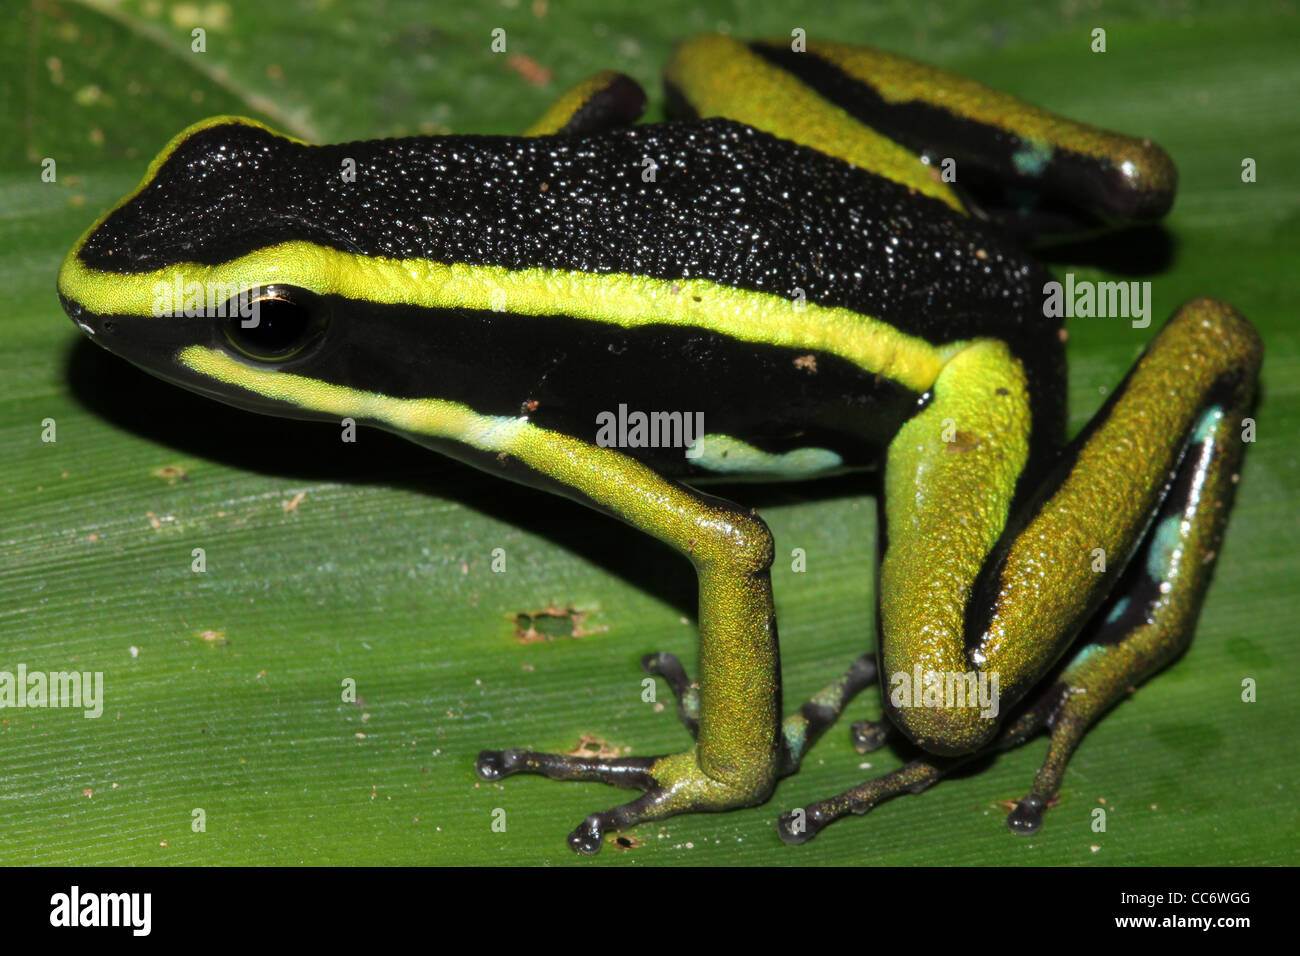 A magnificent Three-striped Poison Arrow Frog (Ameerega trivittata) in the Peruvian Amazon Stock Photo